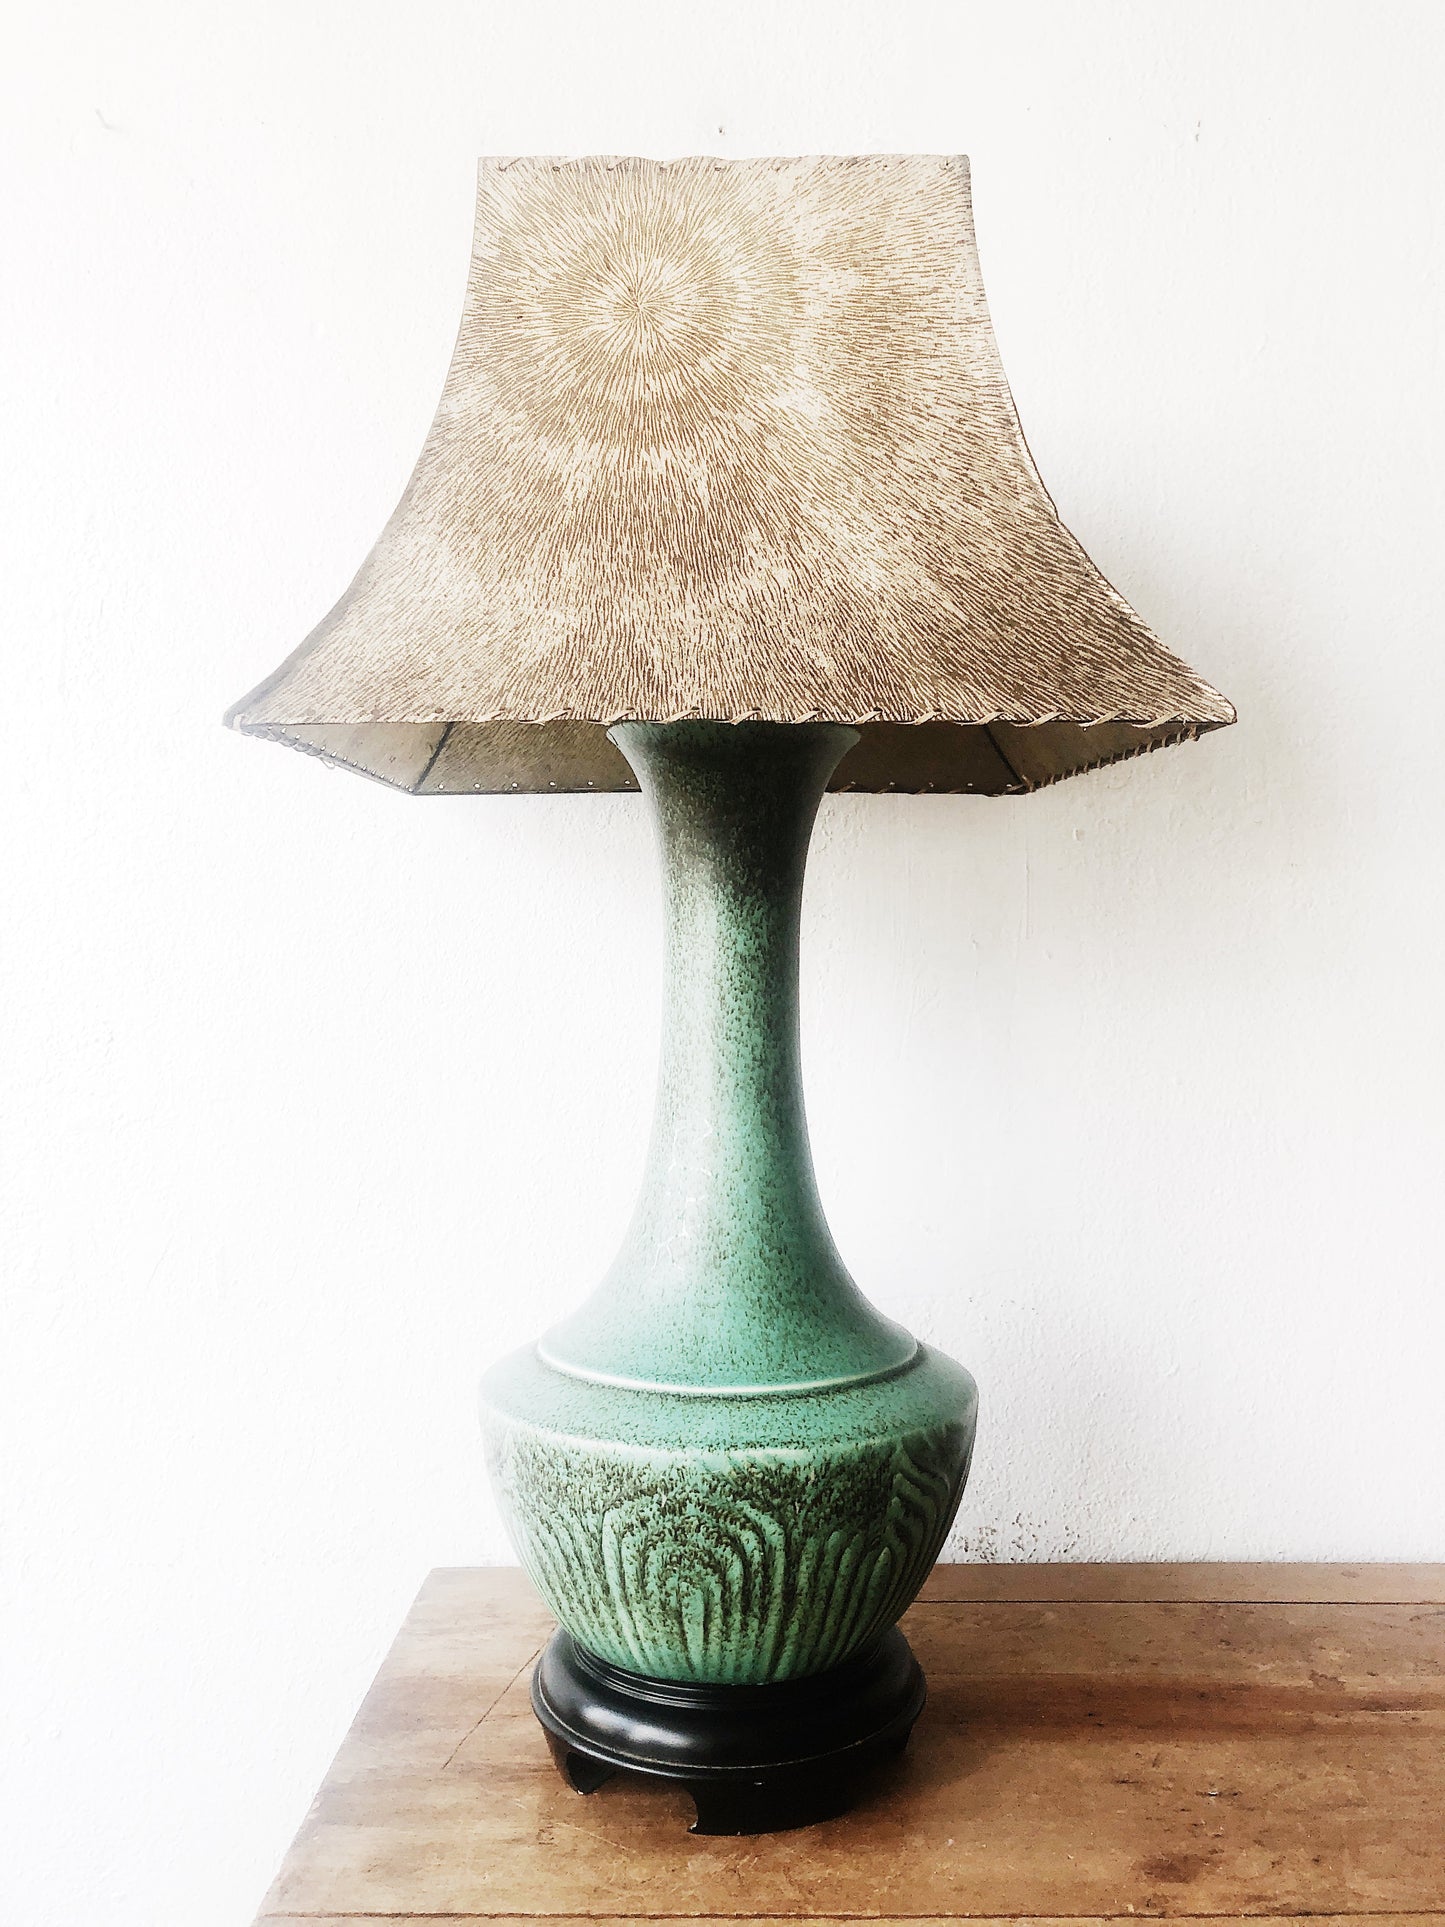 Vintage Turquoise Ceramic Lamp